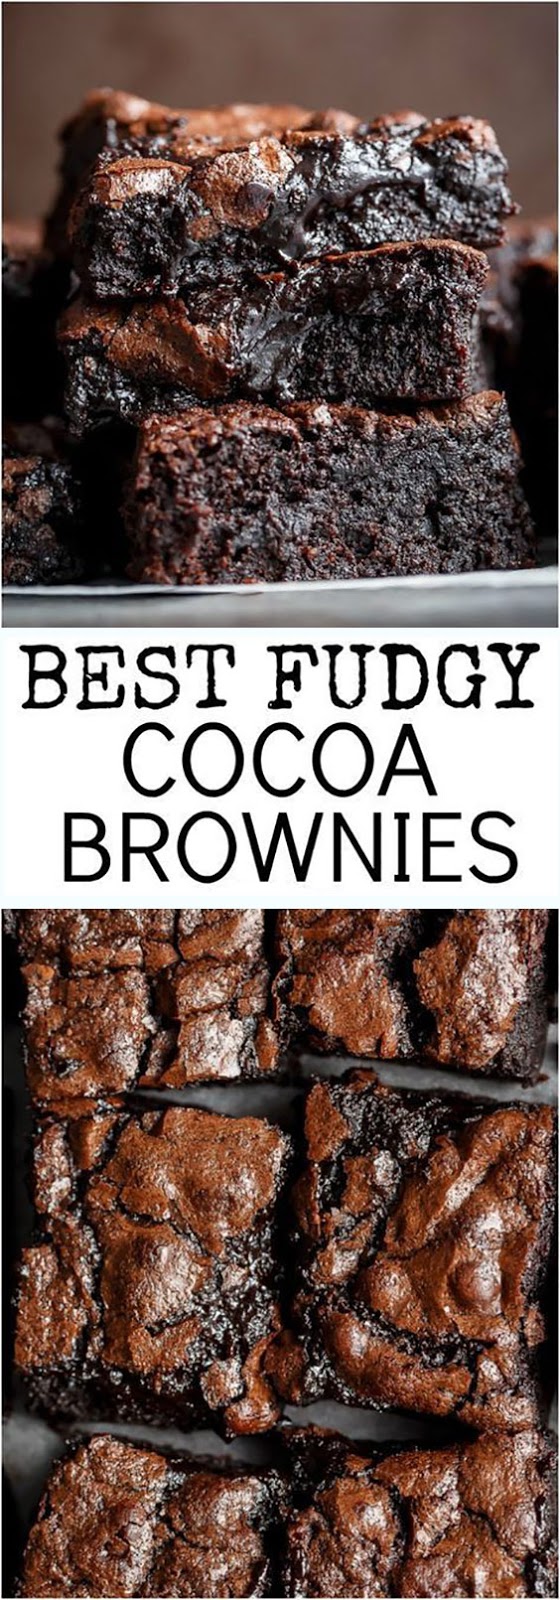 Best Fudgy Cocoa Brownies